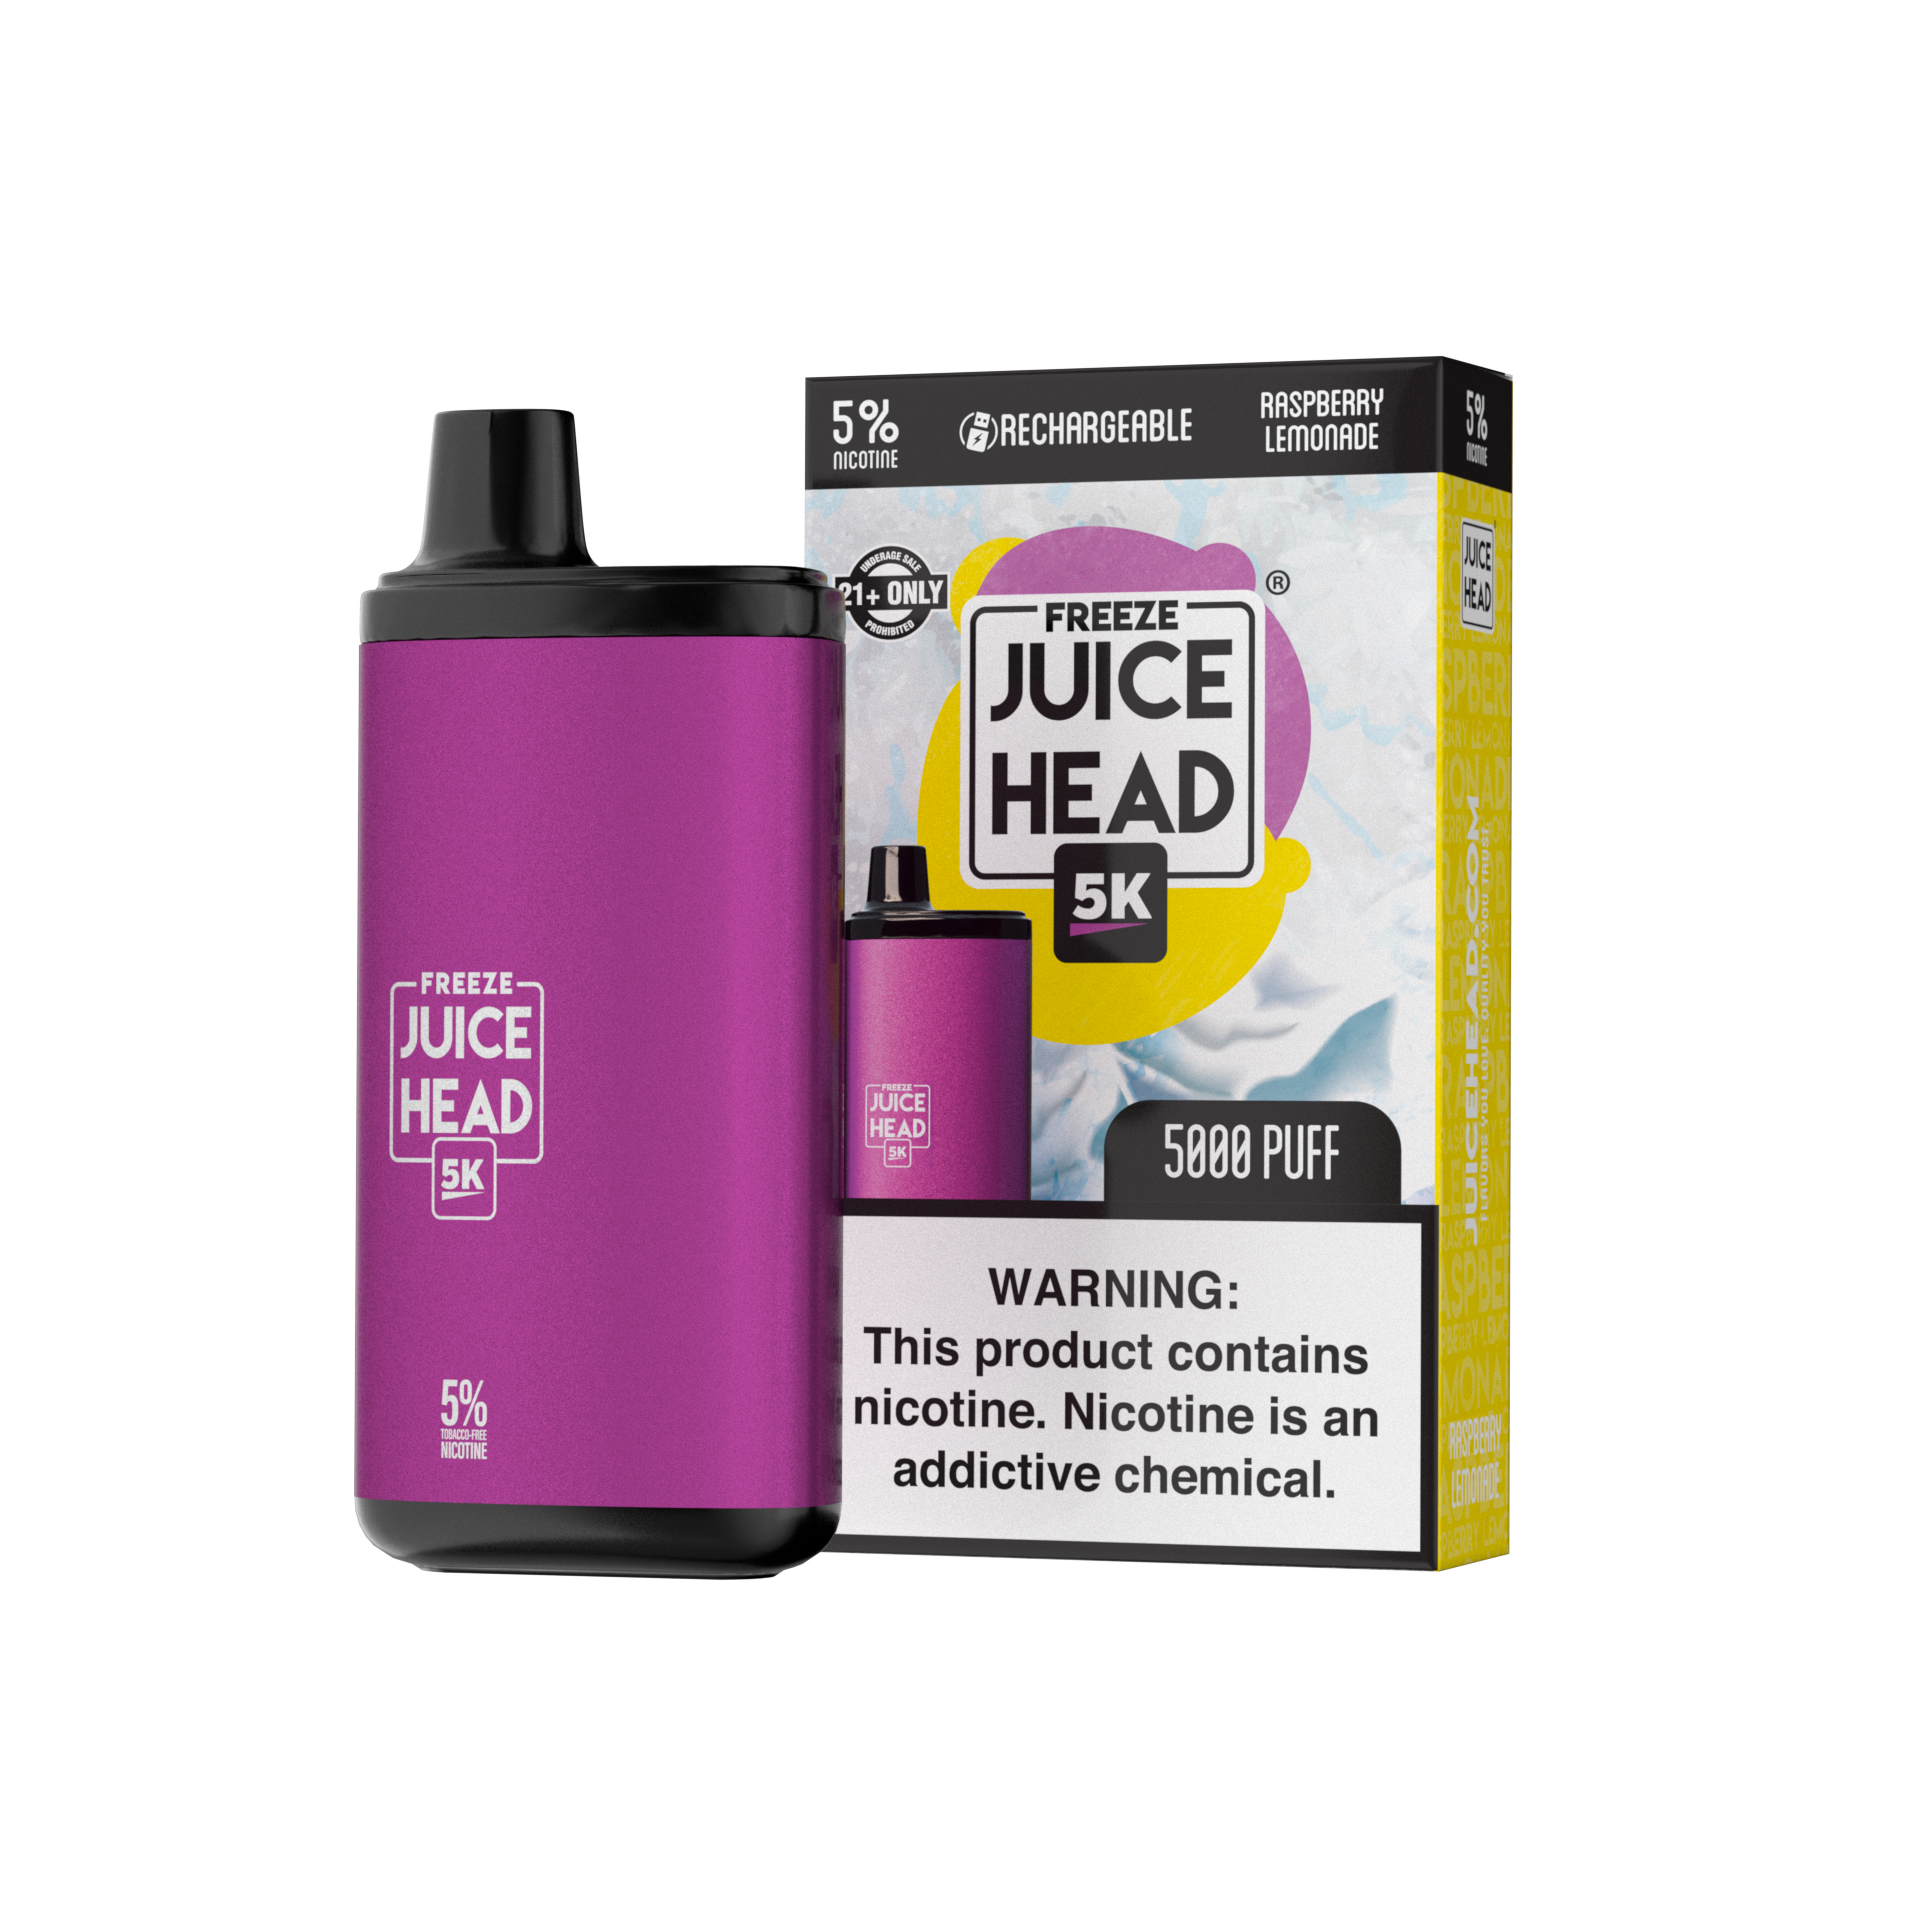 JUICE HEAD 5K - Raspberry Lemonade Freeze